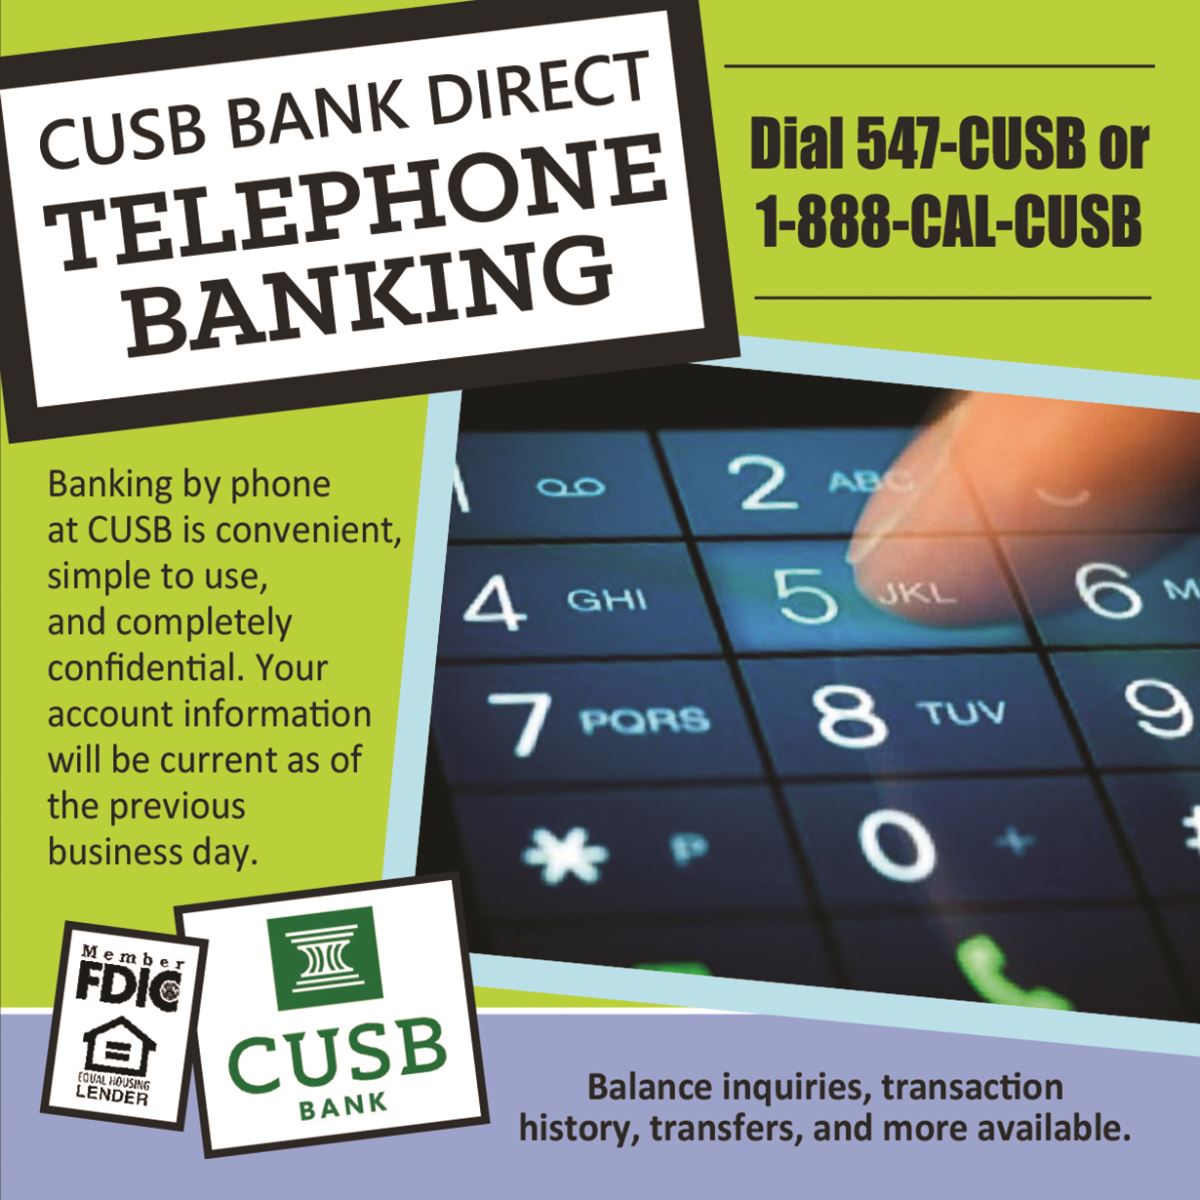 CUSB Direct Telephone Banking